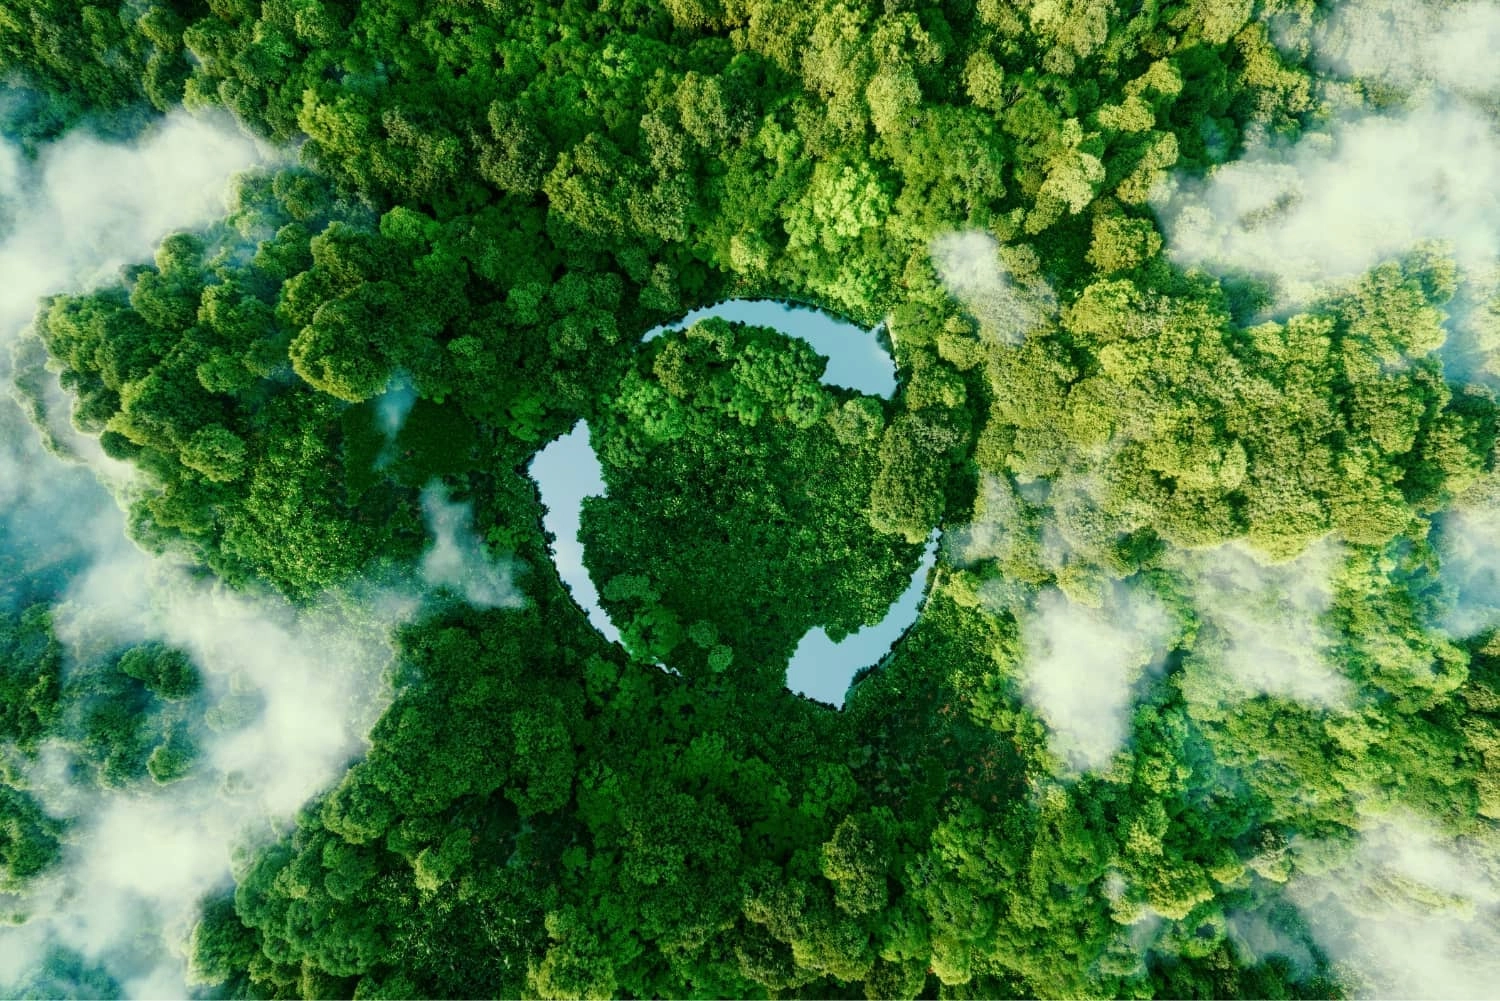 Bird-eye view of a forest